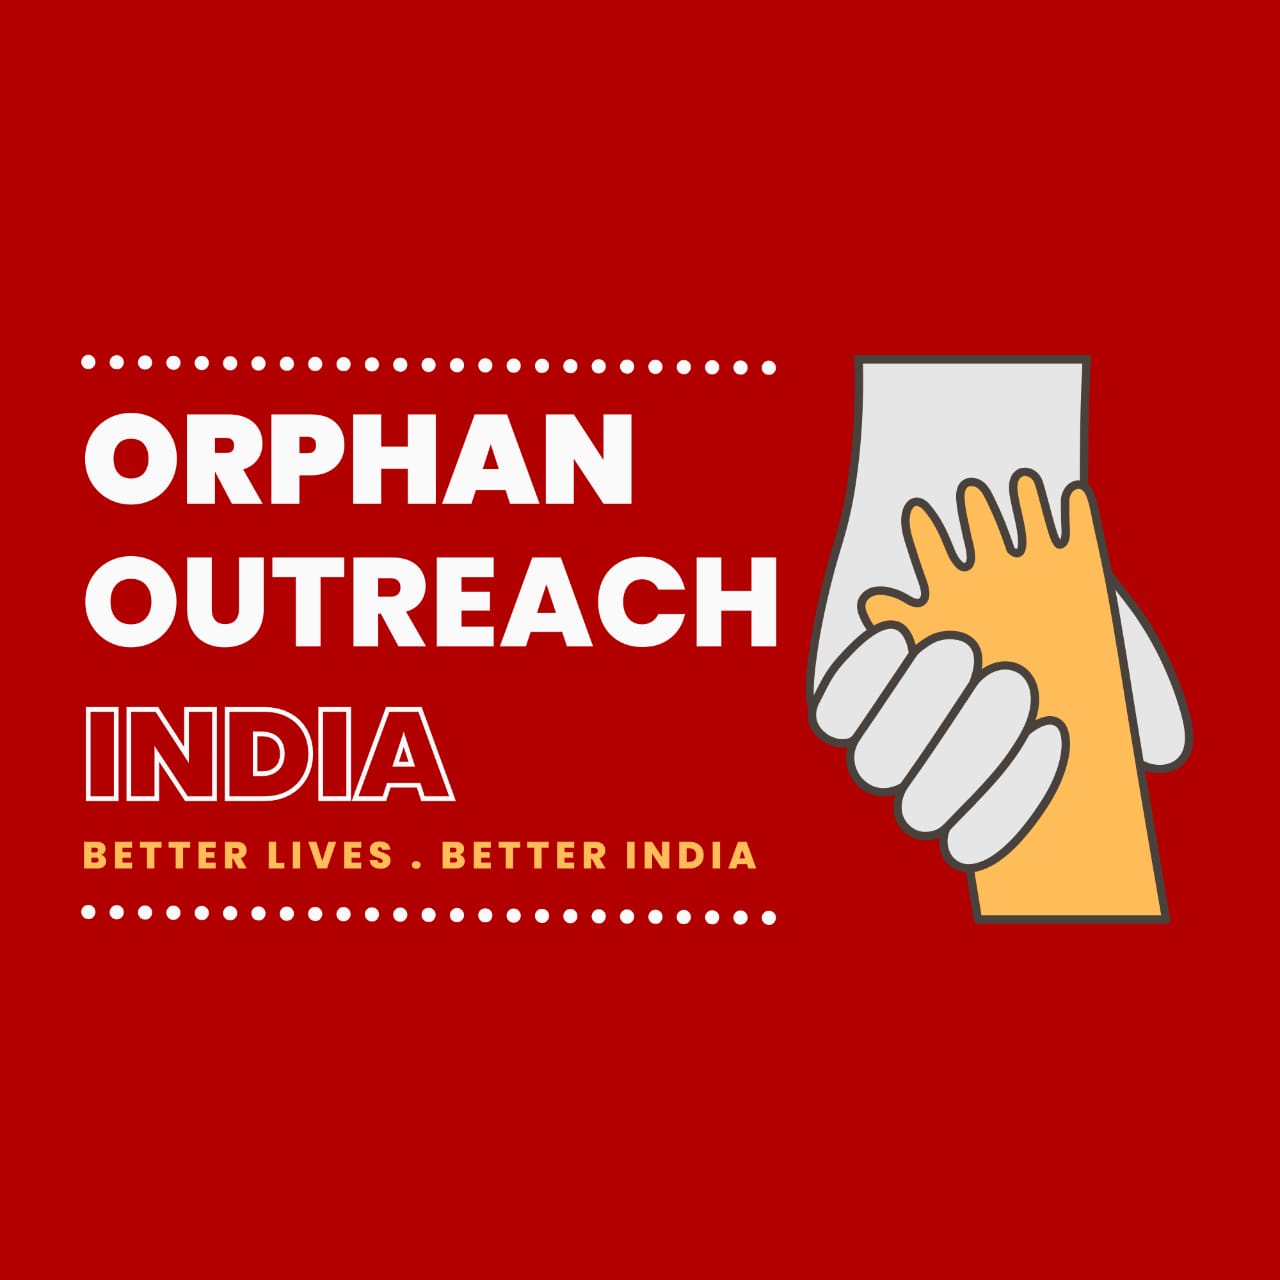 ORPHAN OUTREACH INDIA